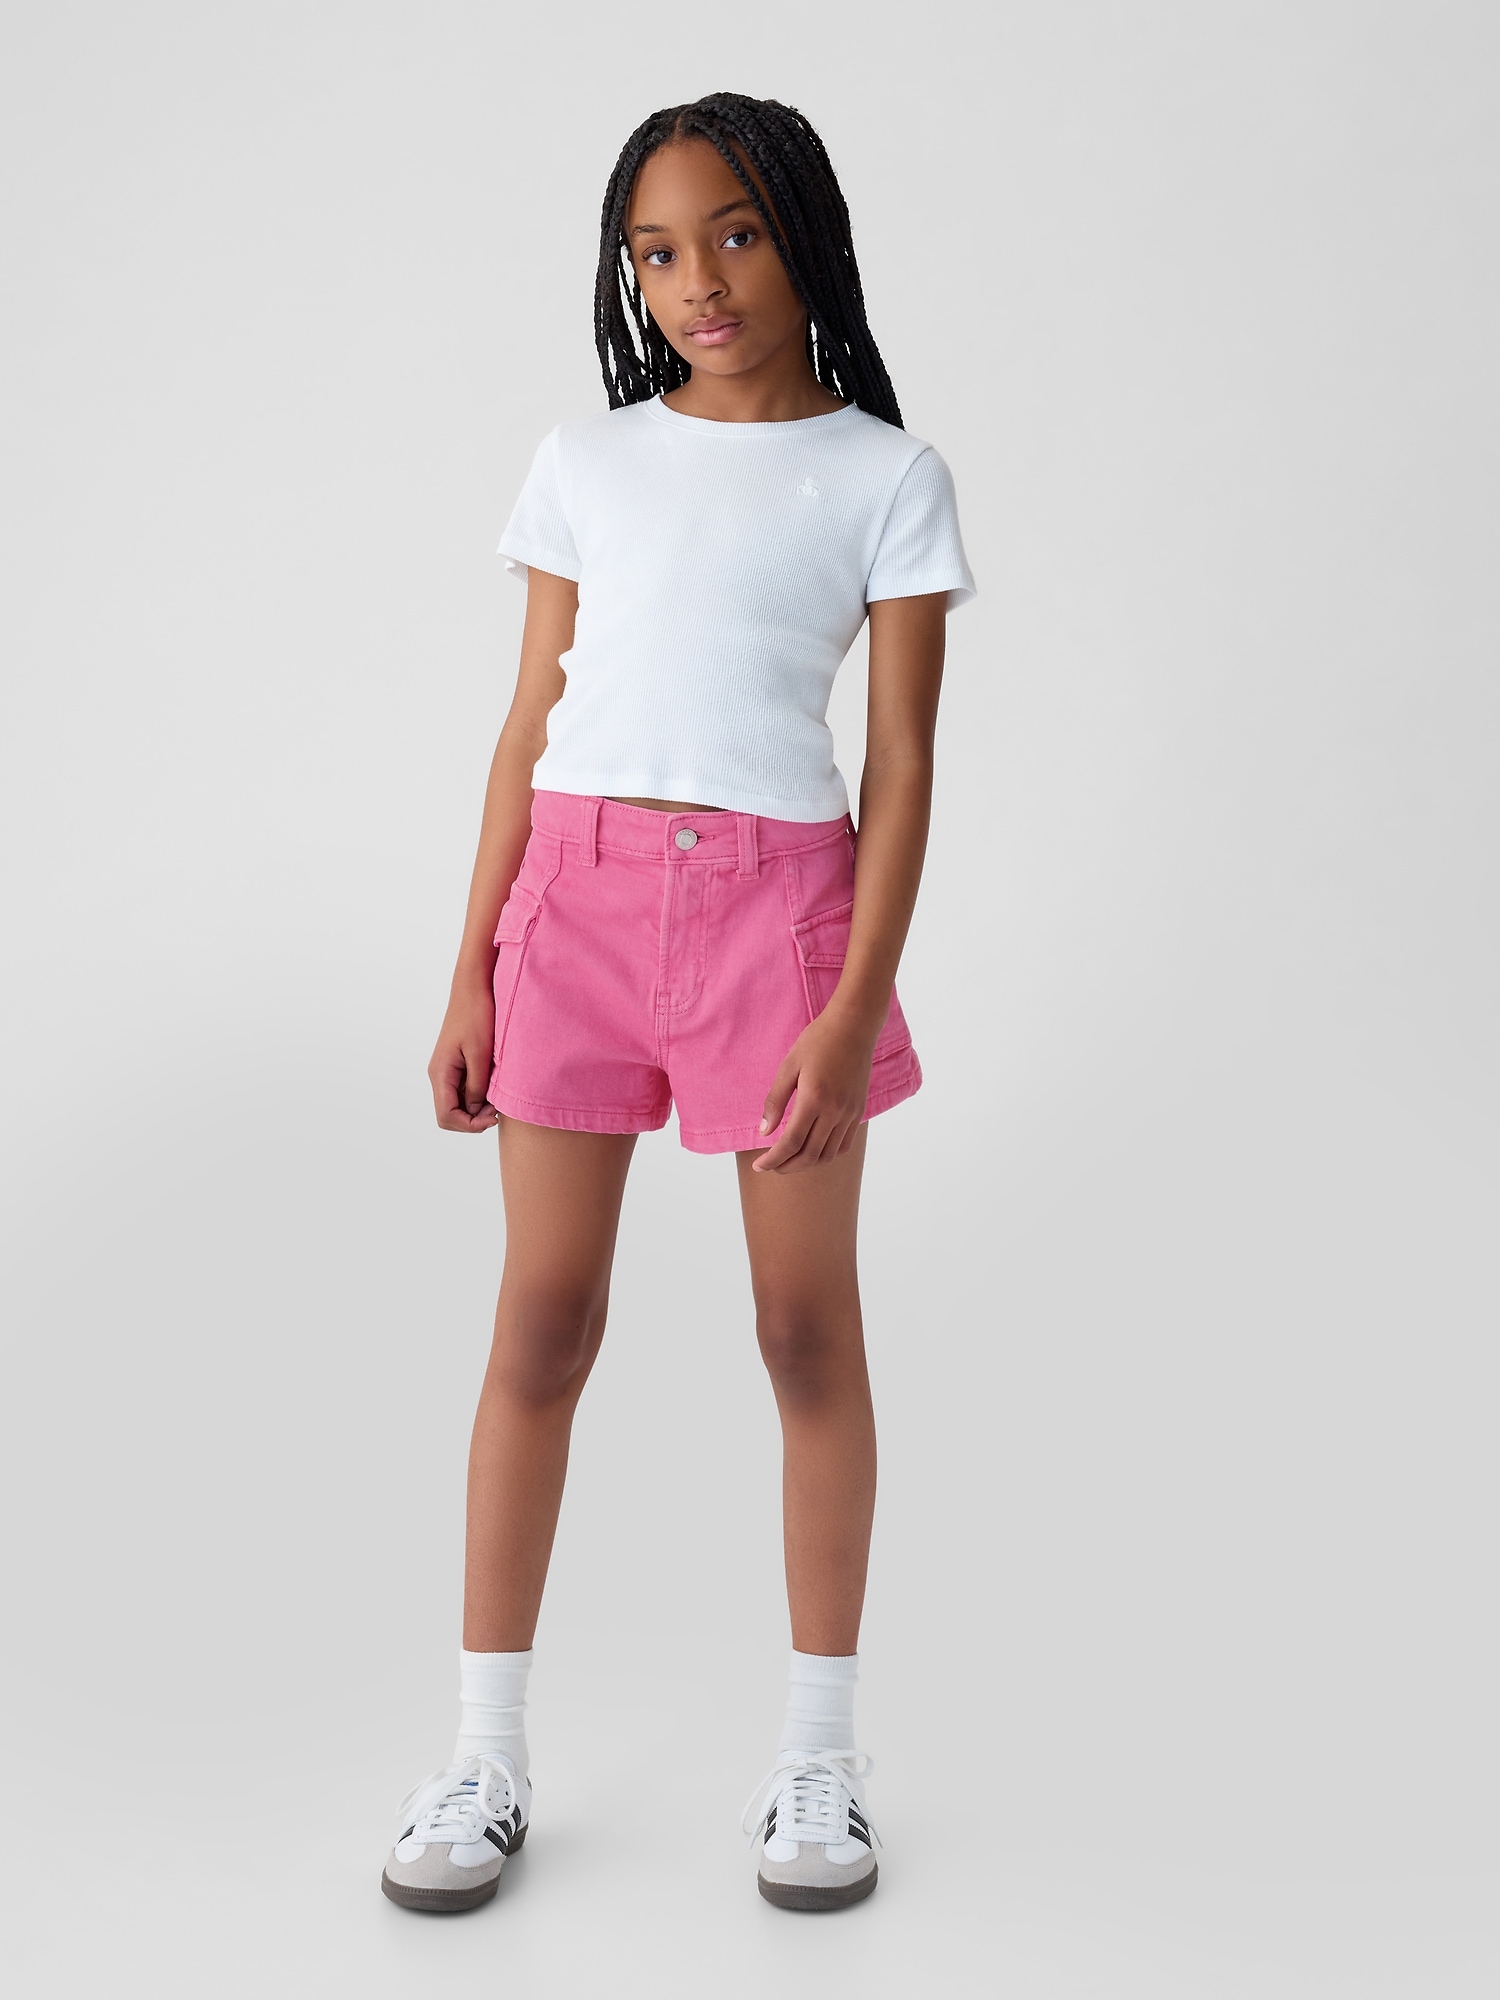 GenesinlifeShops PG - Monnalisa Girls Denim Shorts for Kids - Blue Wear  under jeans going for a walk PS Paul Smith